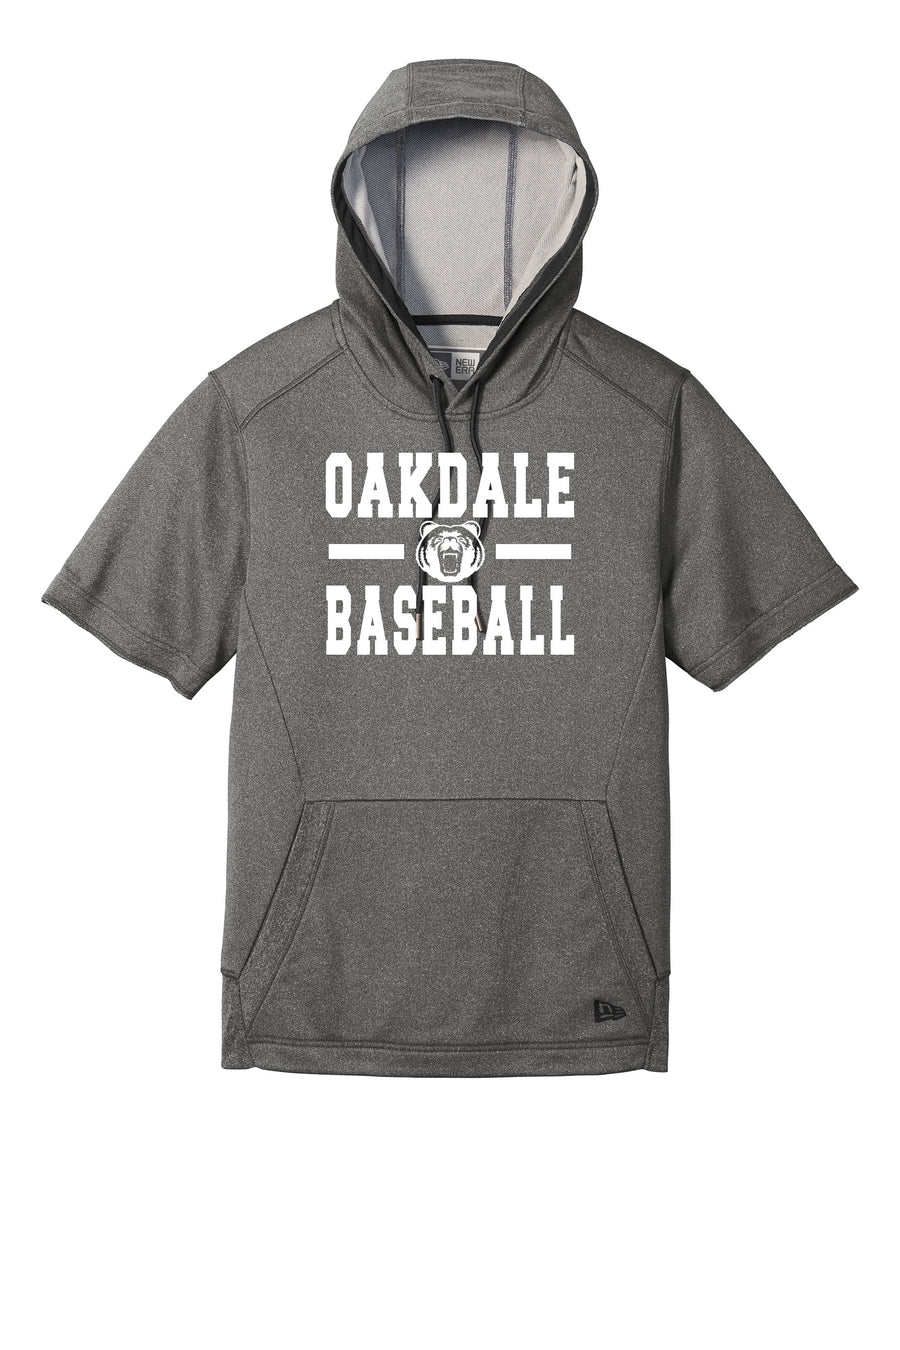 Oakdale Baseball Short Sleeve Hoodie (OHS)